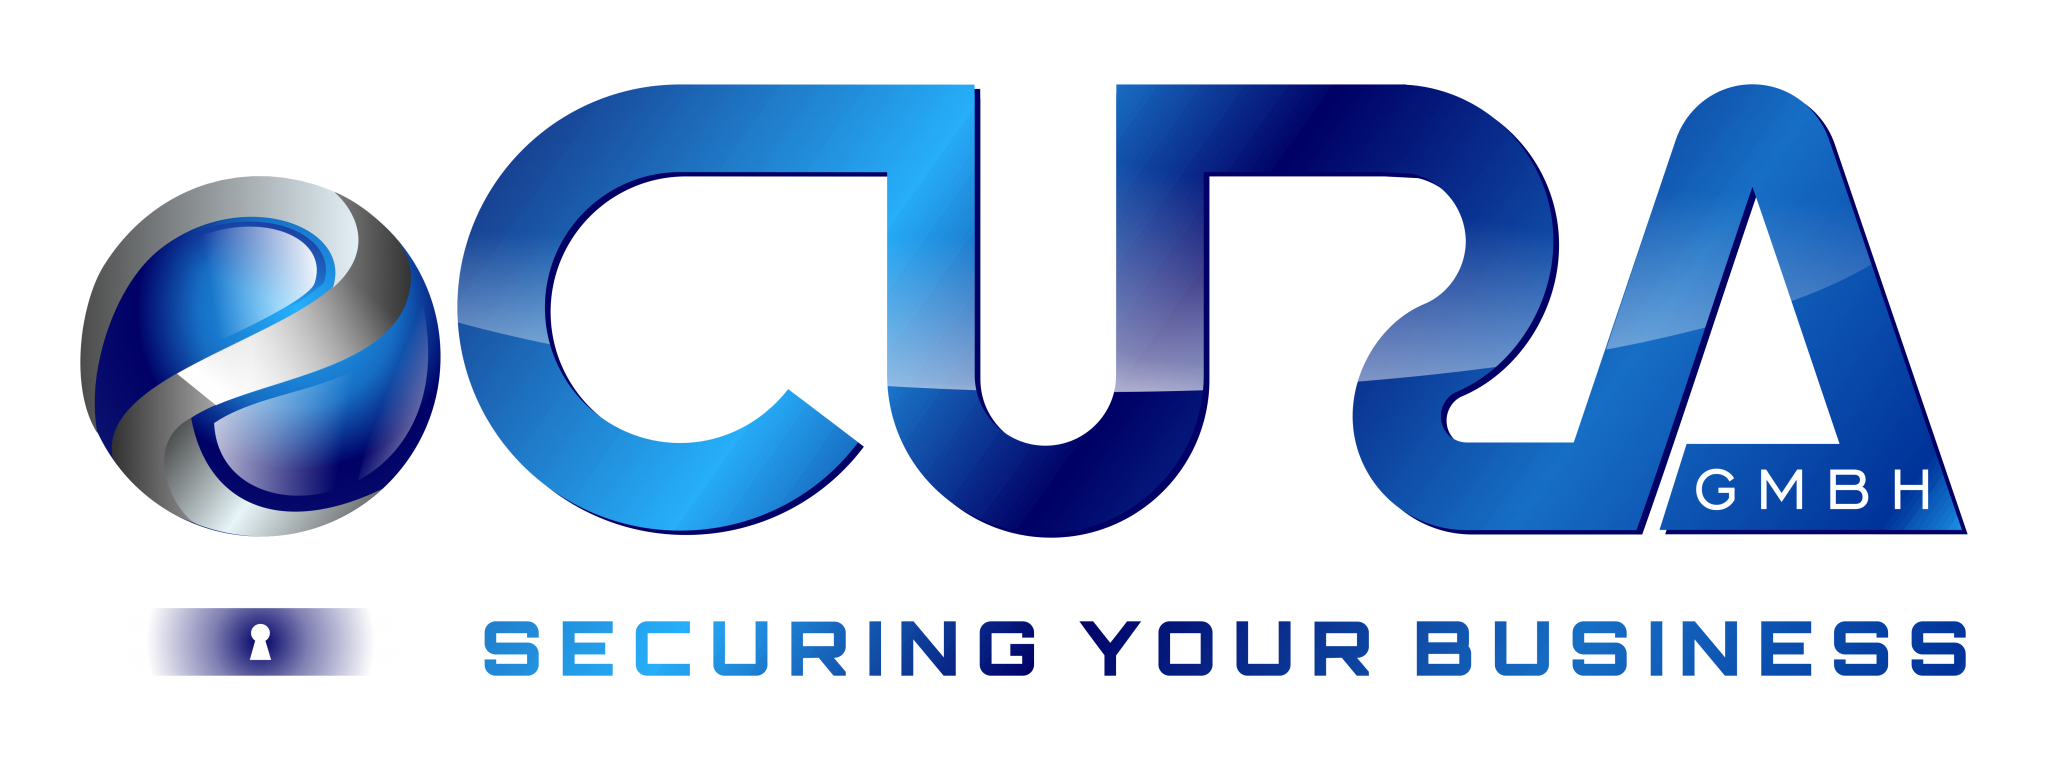 eCURA GmbH - Cyber Security